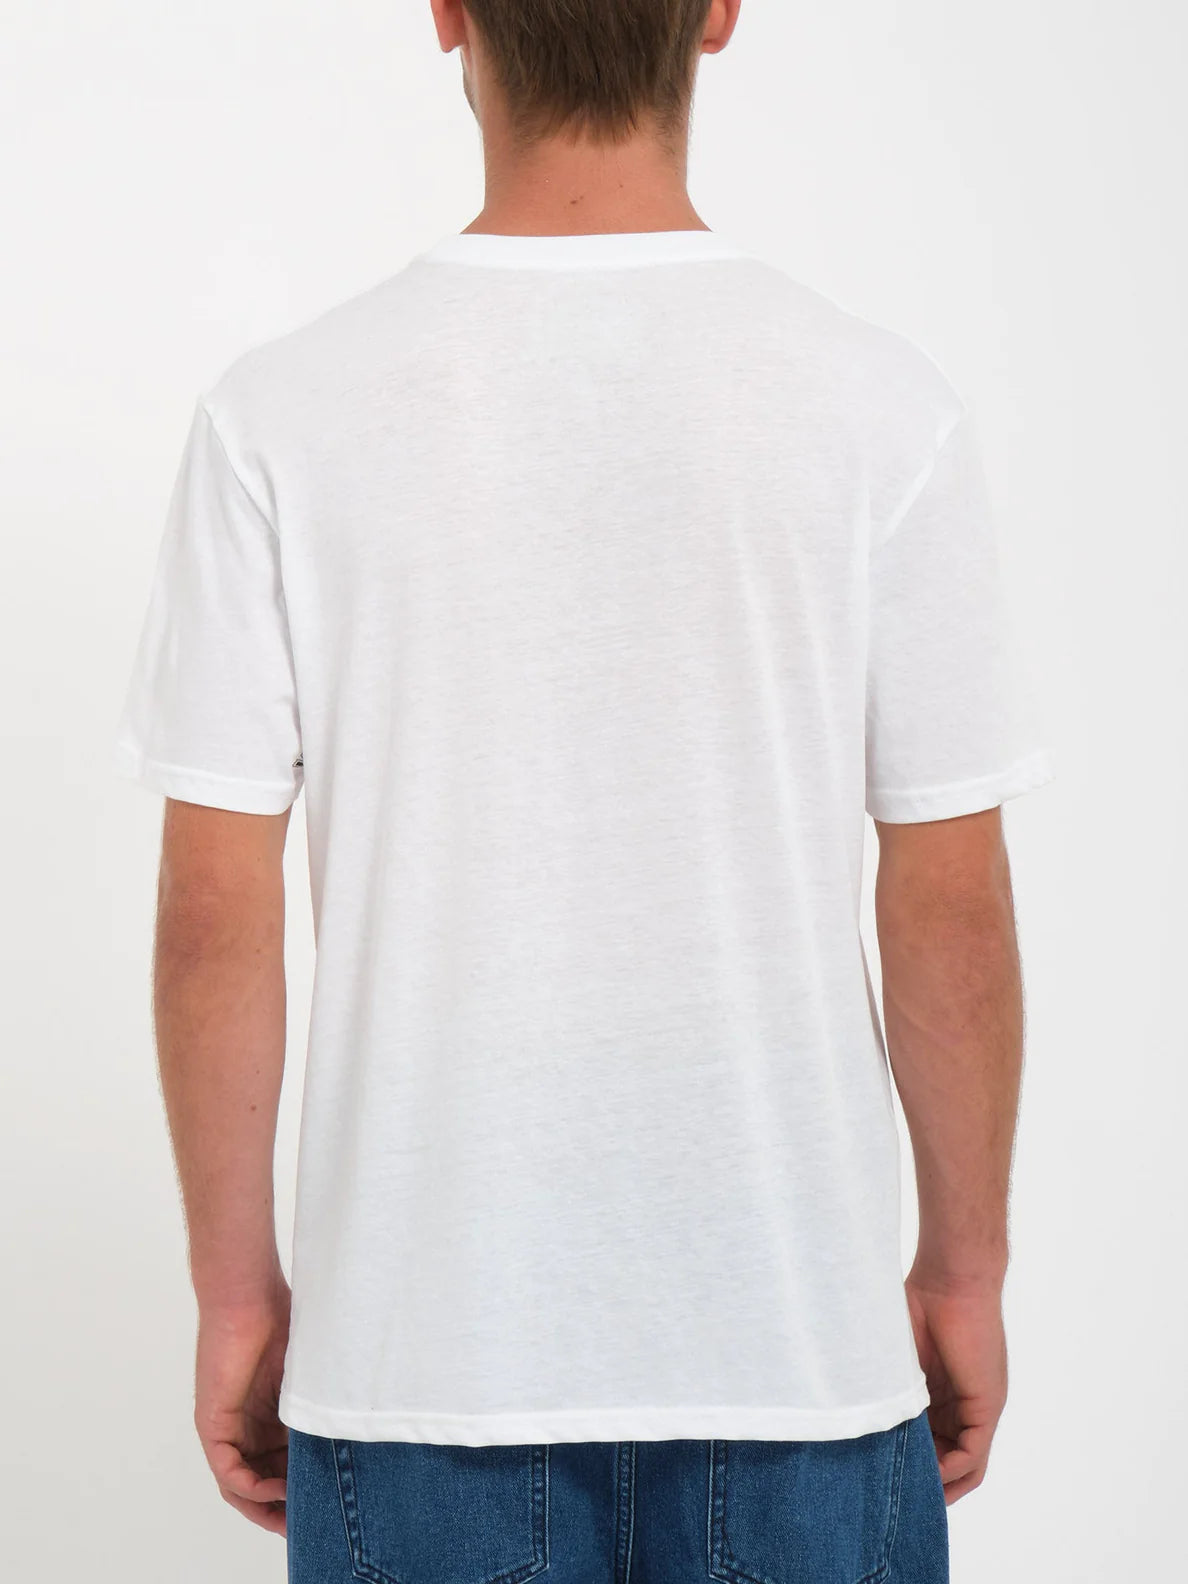 Camiseta Volcom Westgames - White | Camisetas de hombre | Camisetas manga corta de hombre | Volcom Shop | surfdevils.com